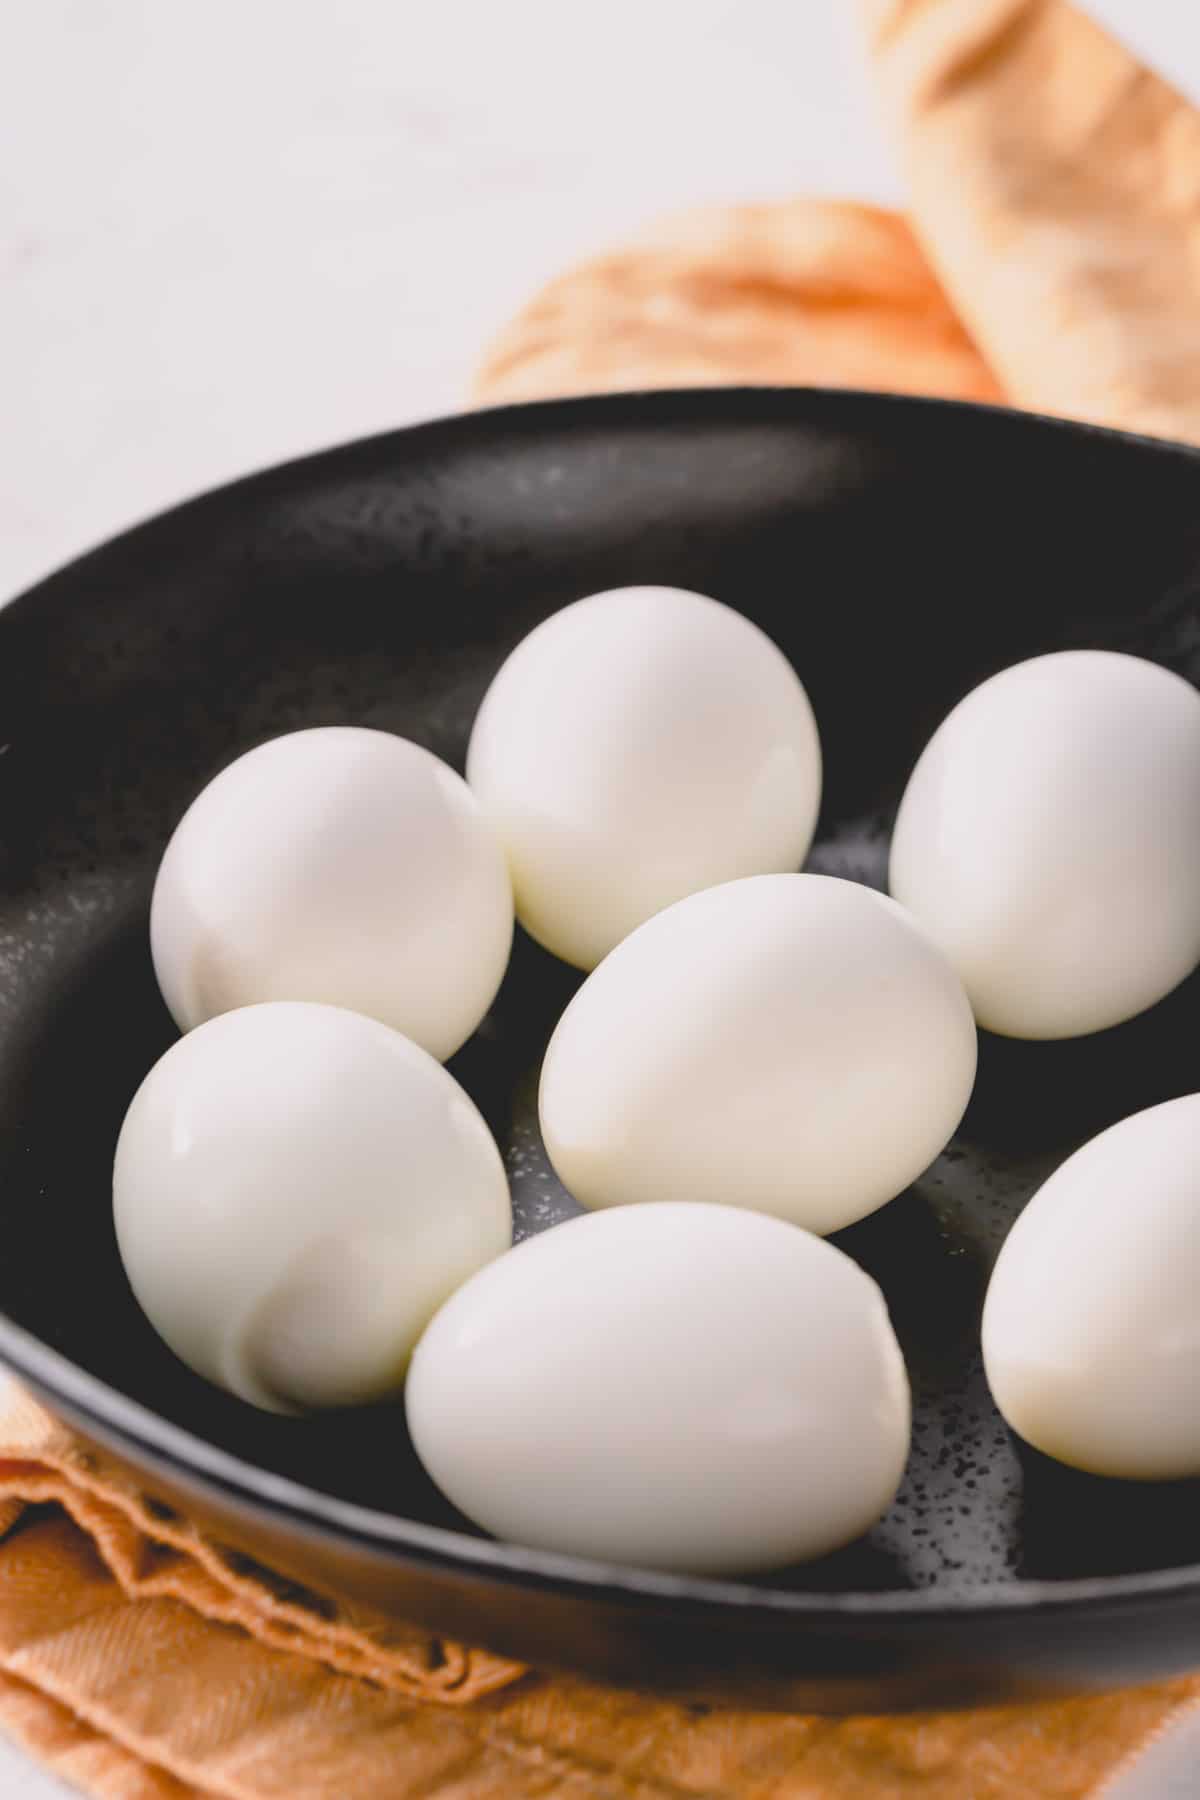 Peeled hard boiled eggs on a white plate.